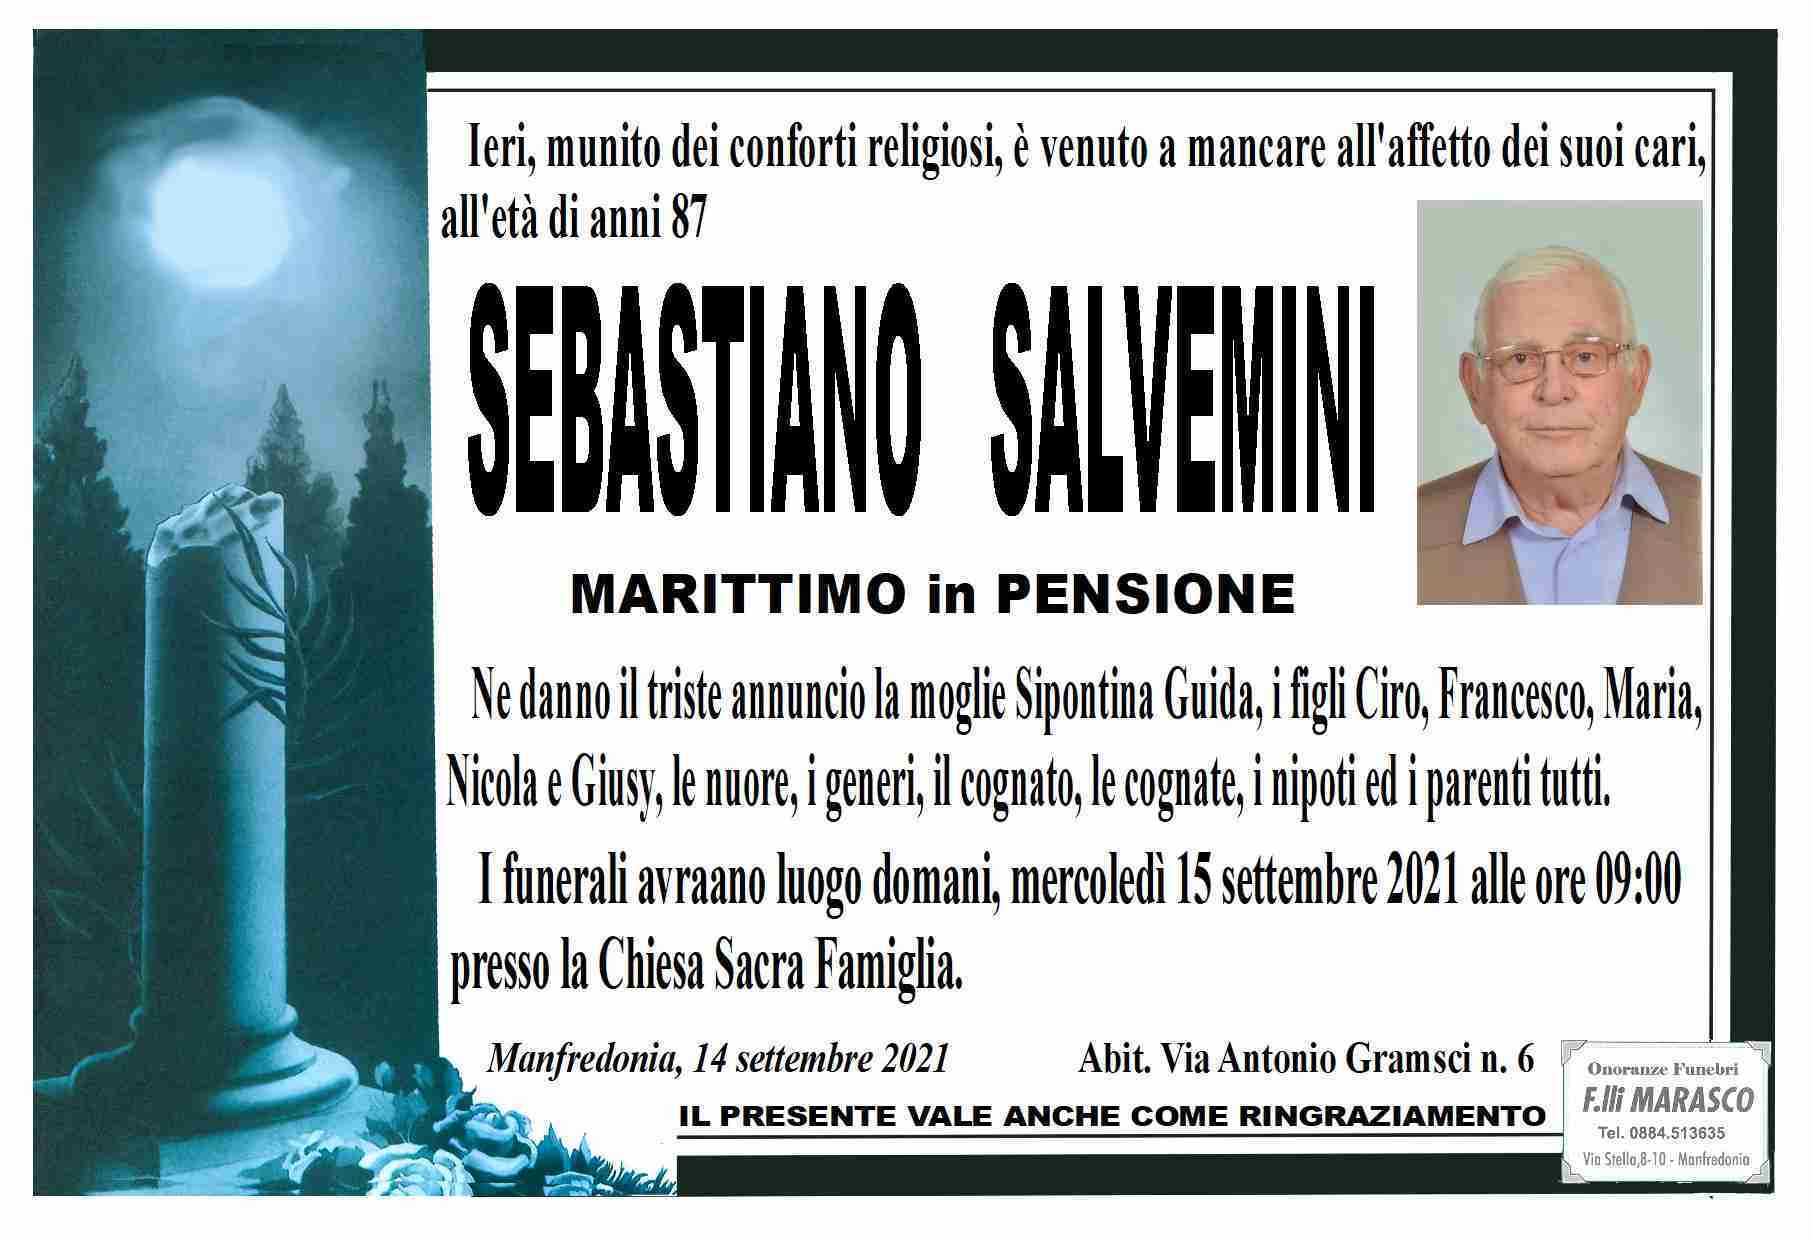 Sebastiano Salvemini